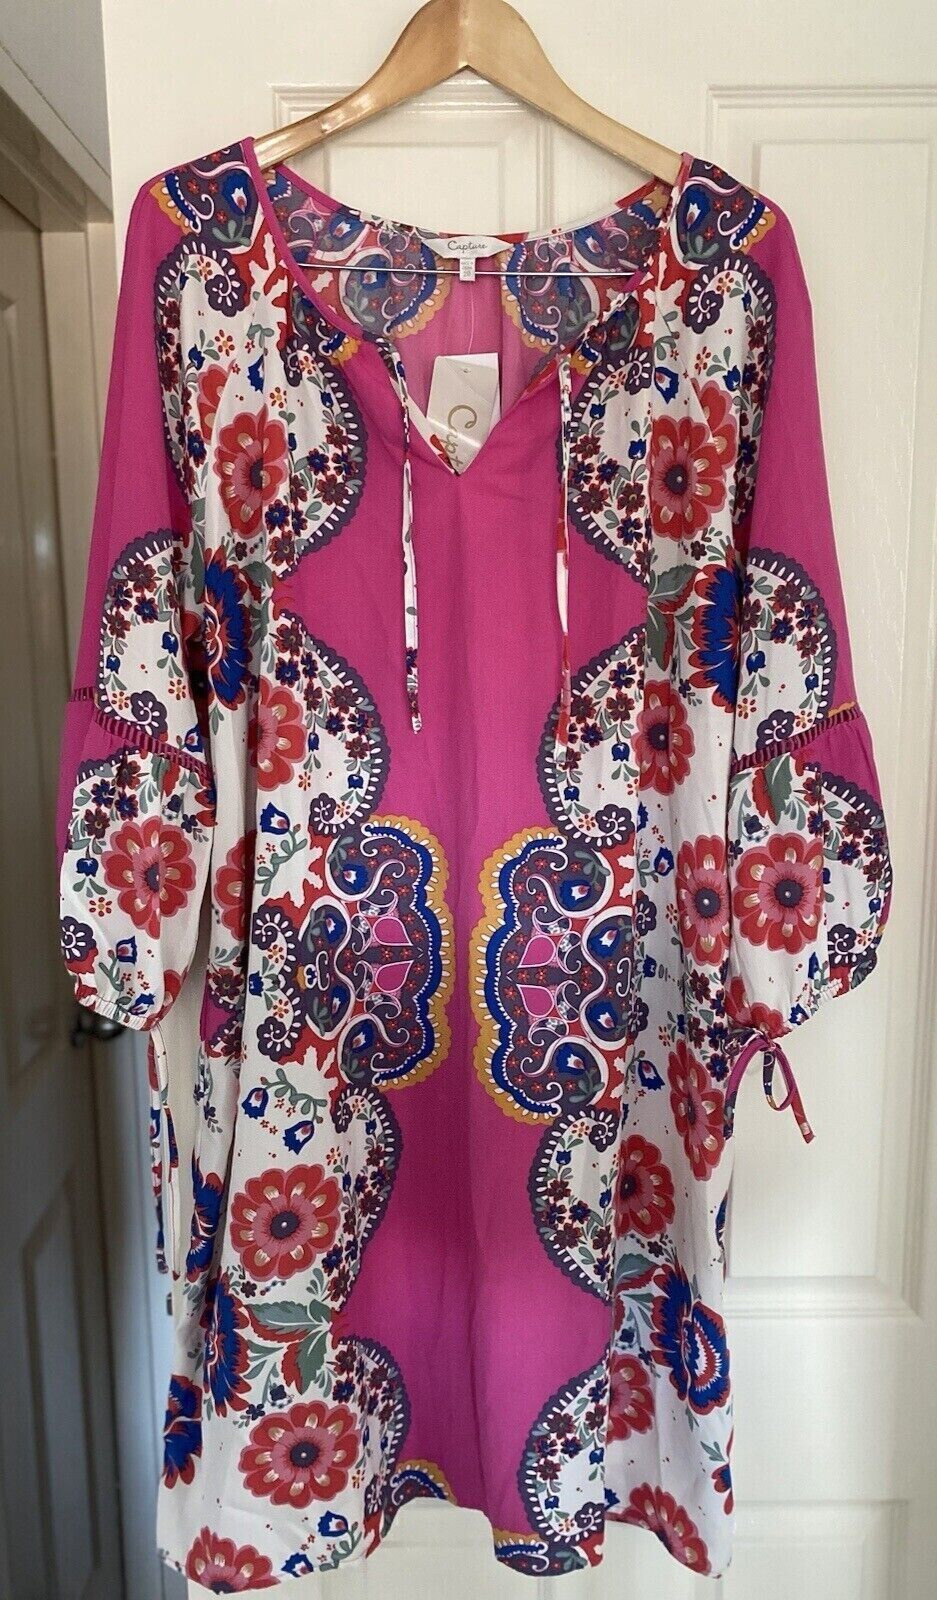 CAPTURE Dress - Size 20 - Pink Print Paisley Floral Design BNWT